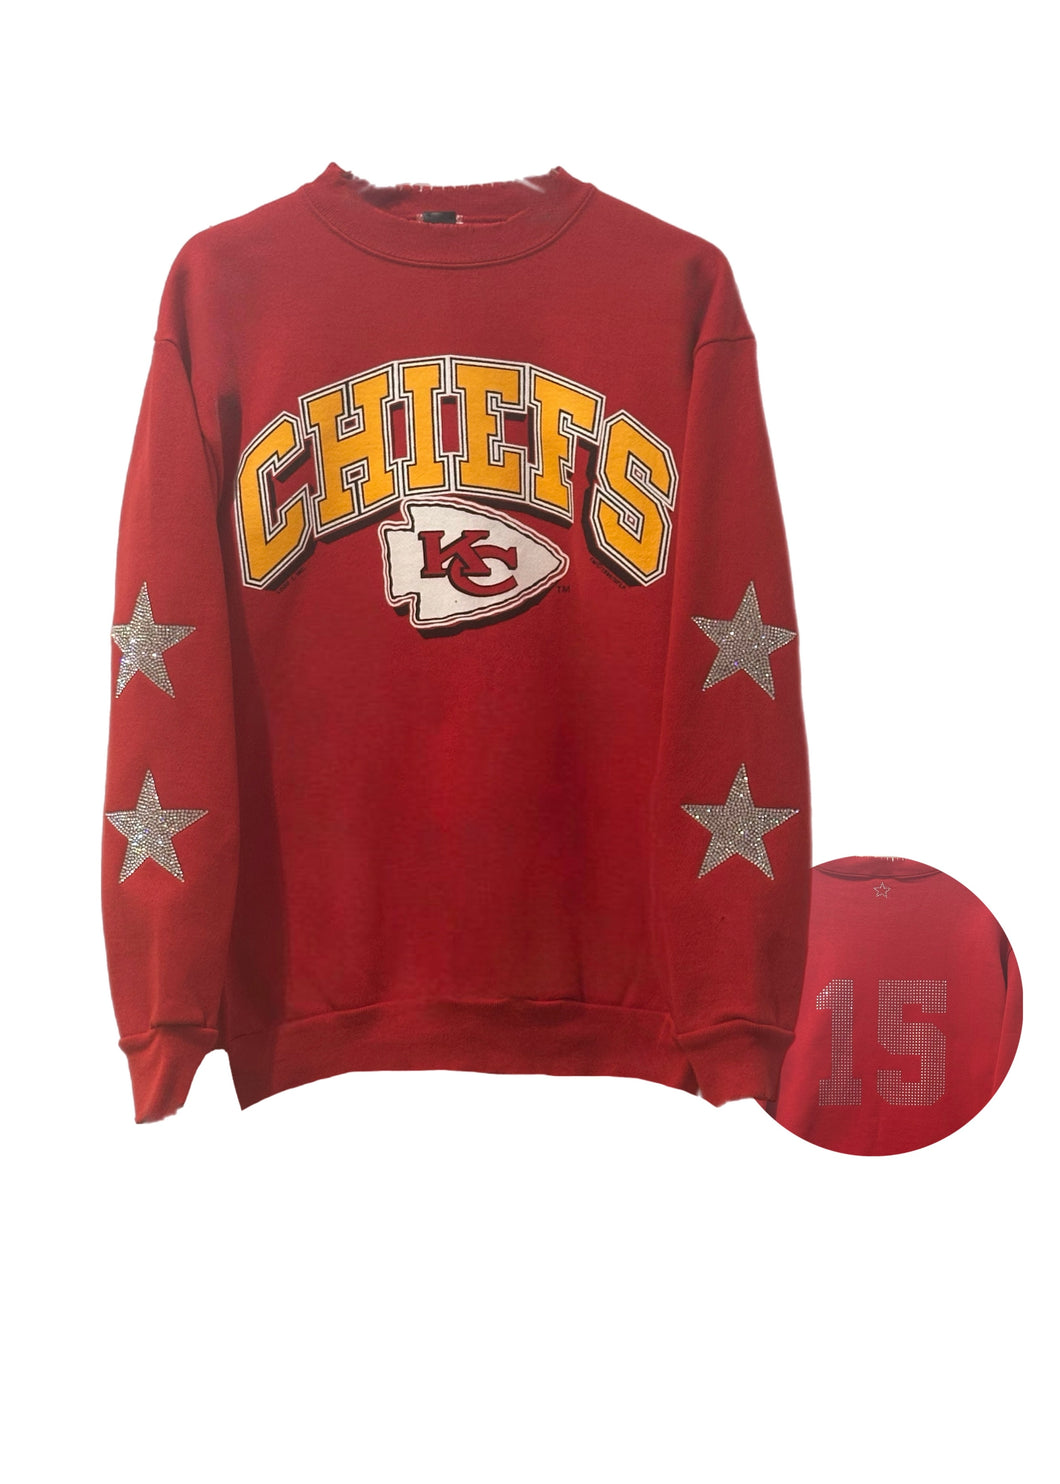 Kansas City Chiefs, NFL One of a KIND Vintage Sweatshirt with Crystal Star Design, Custom Crystal Large Number